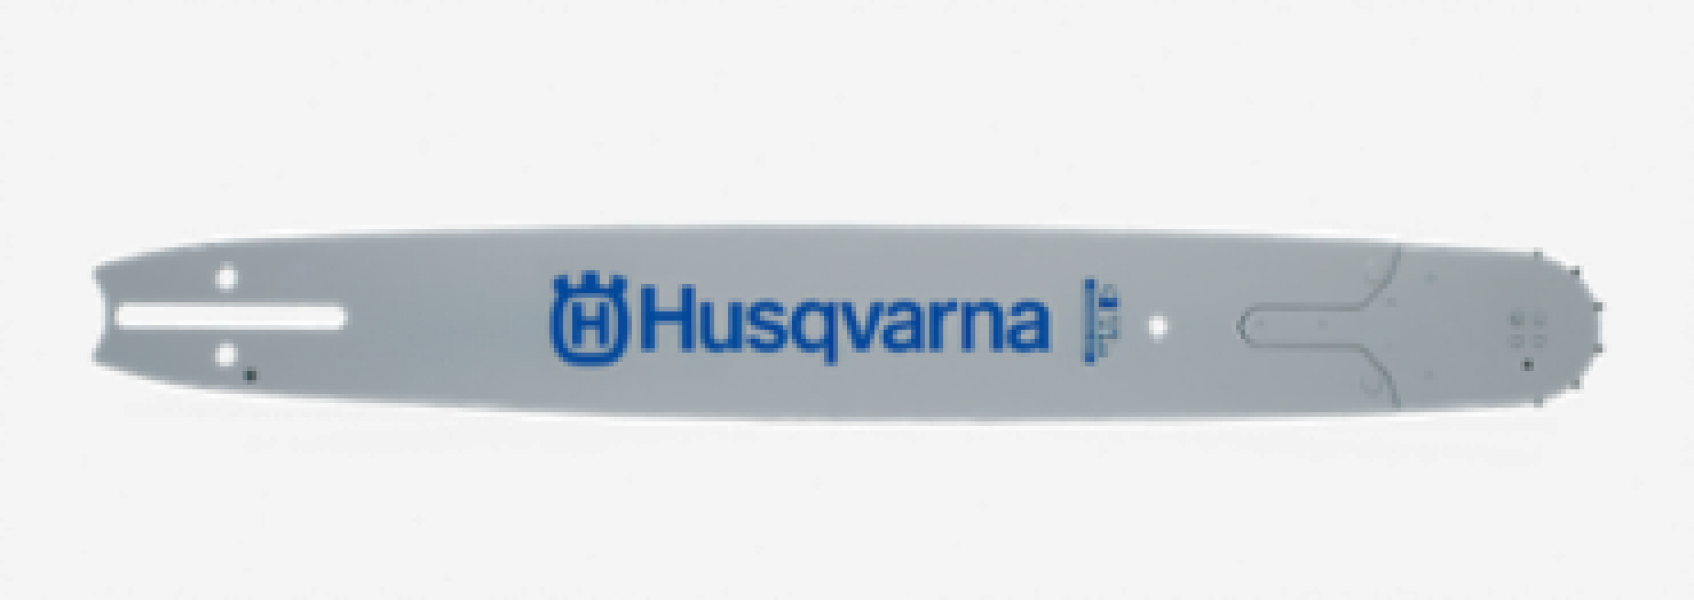 Husqvarna HL280-45 Chainsaw Guide Bar, 3/8" mini pitch, .050 gauge, small